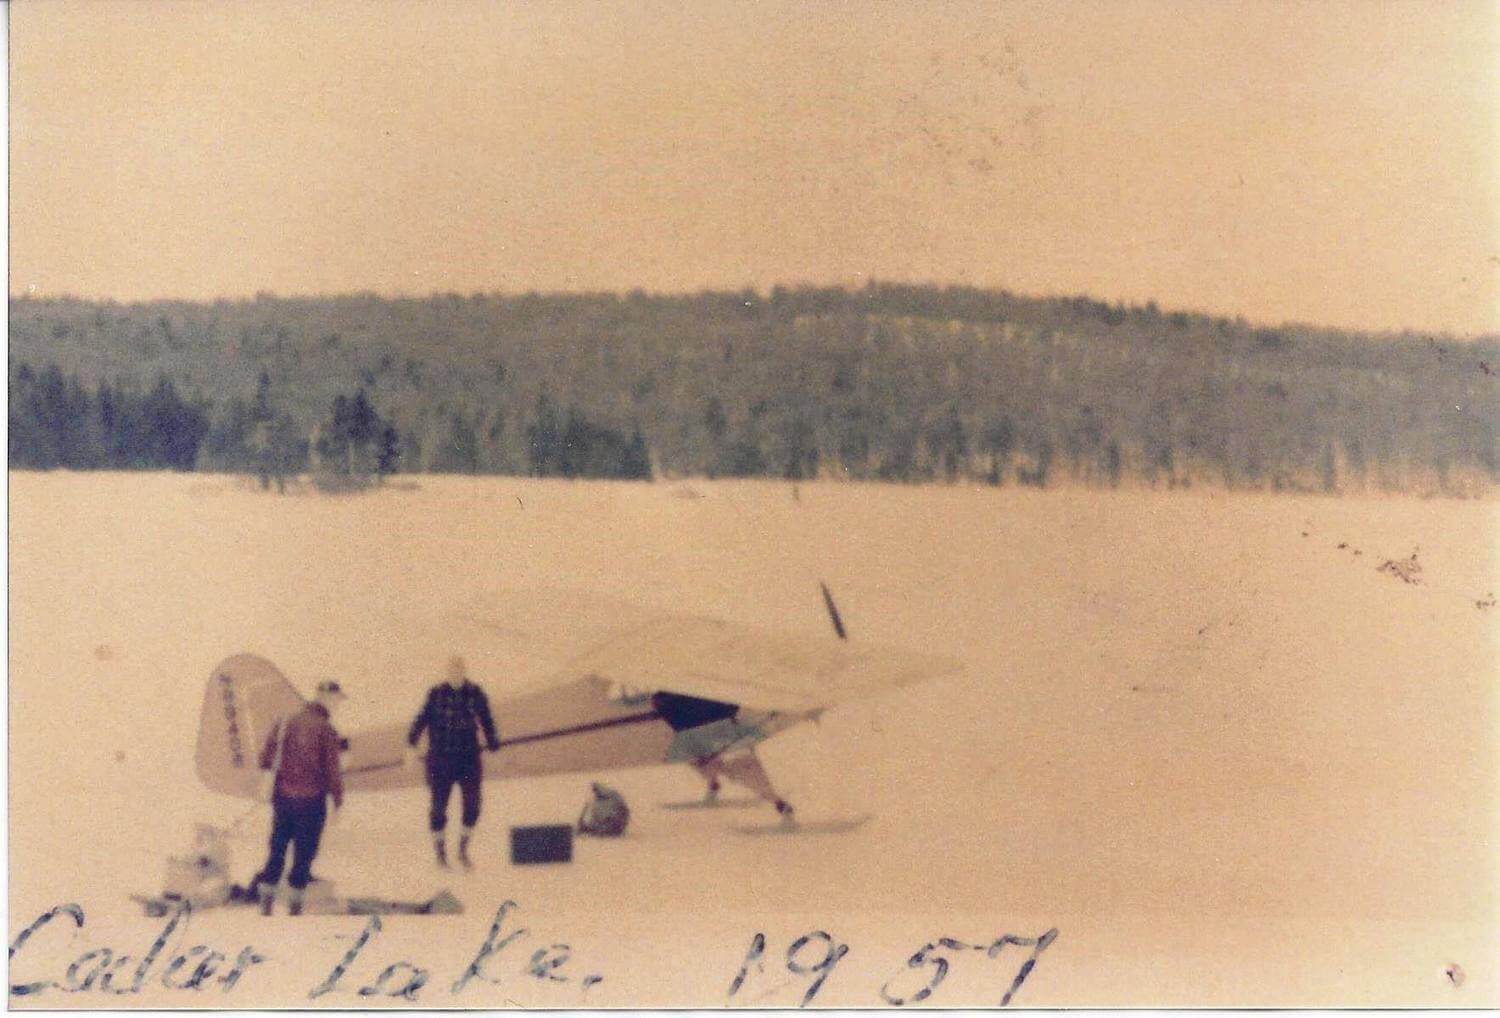 Seaplane on Cedar Lake in 1957